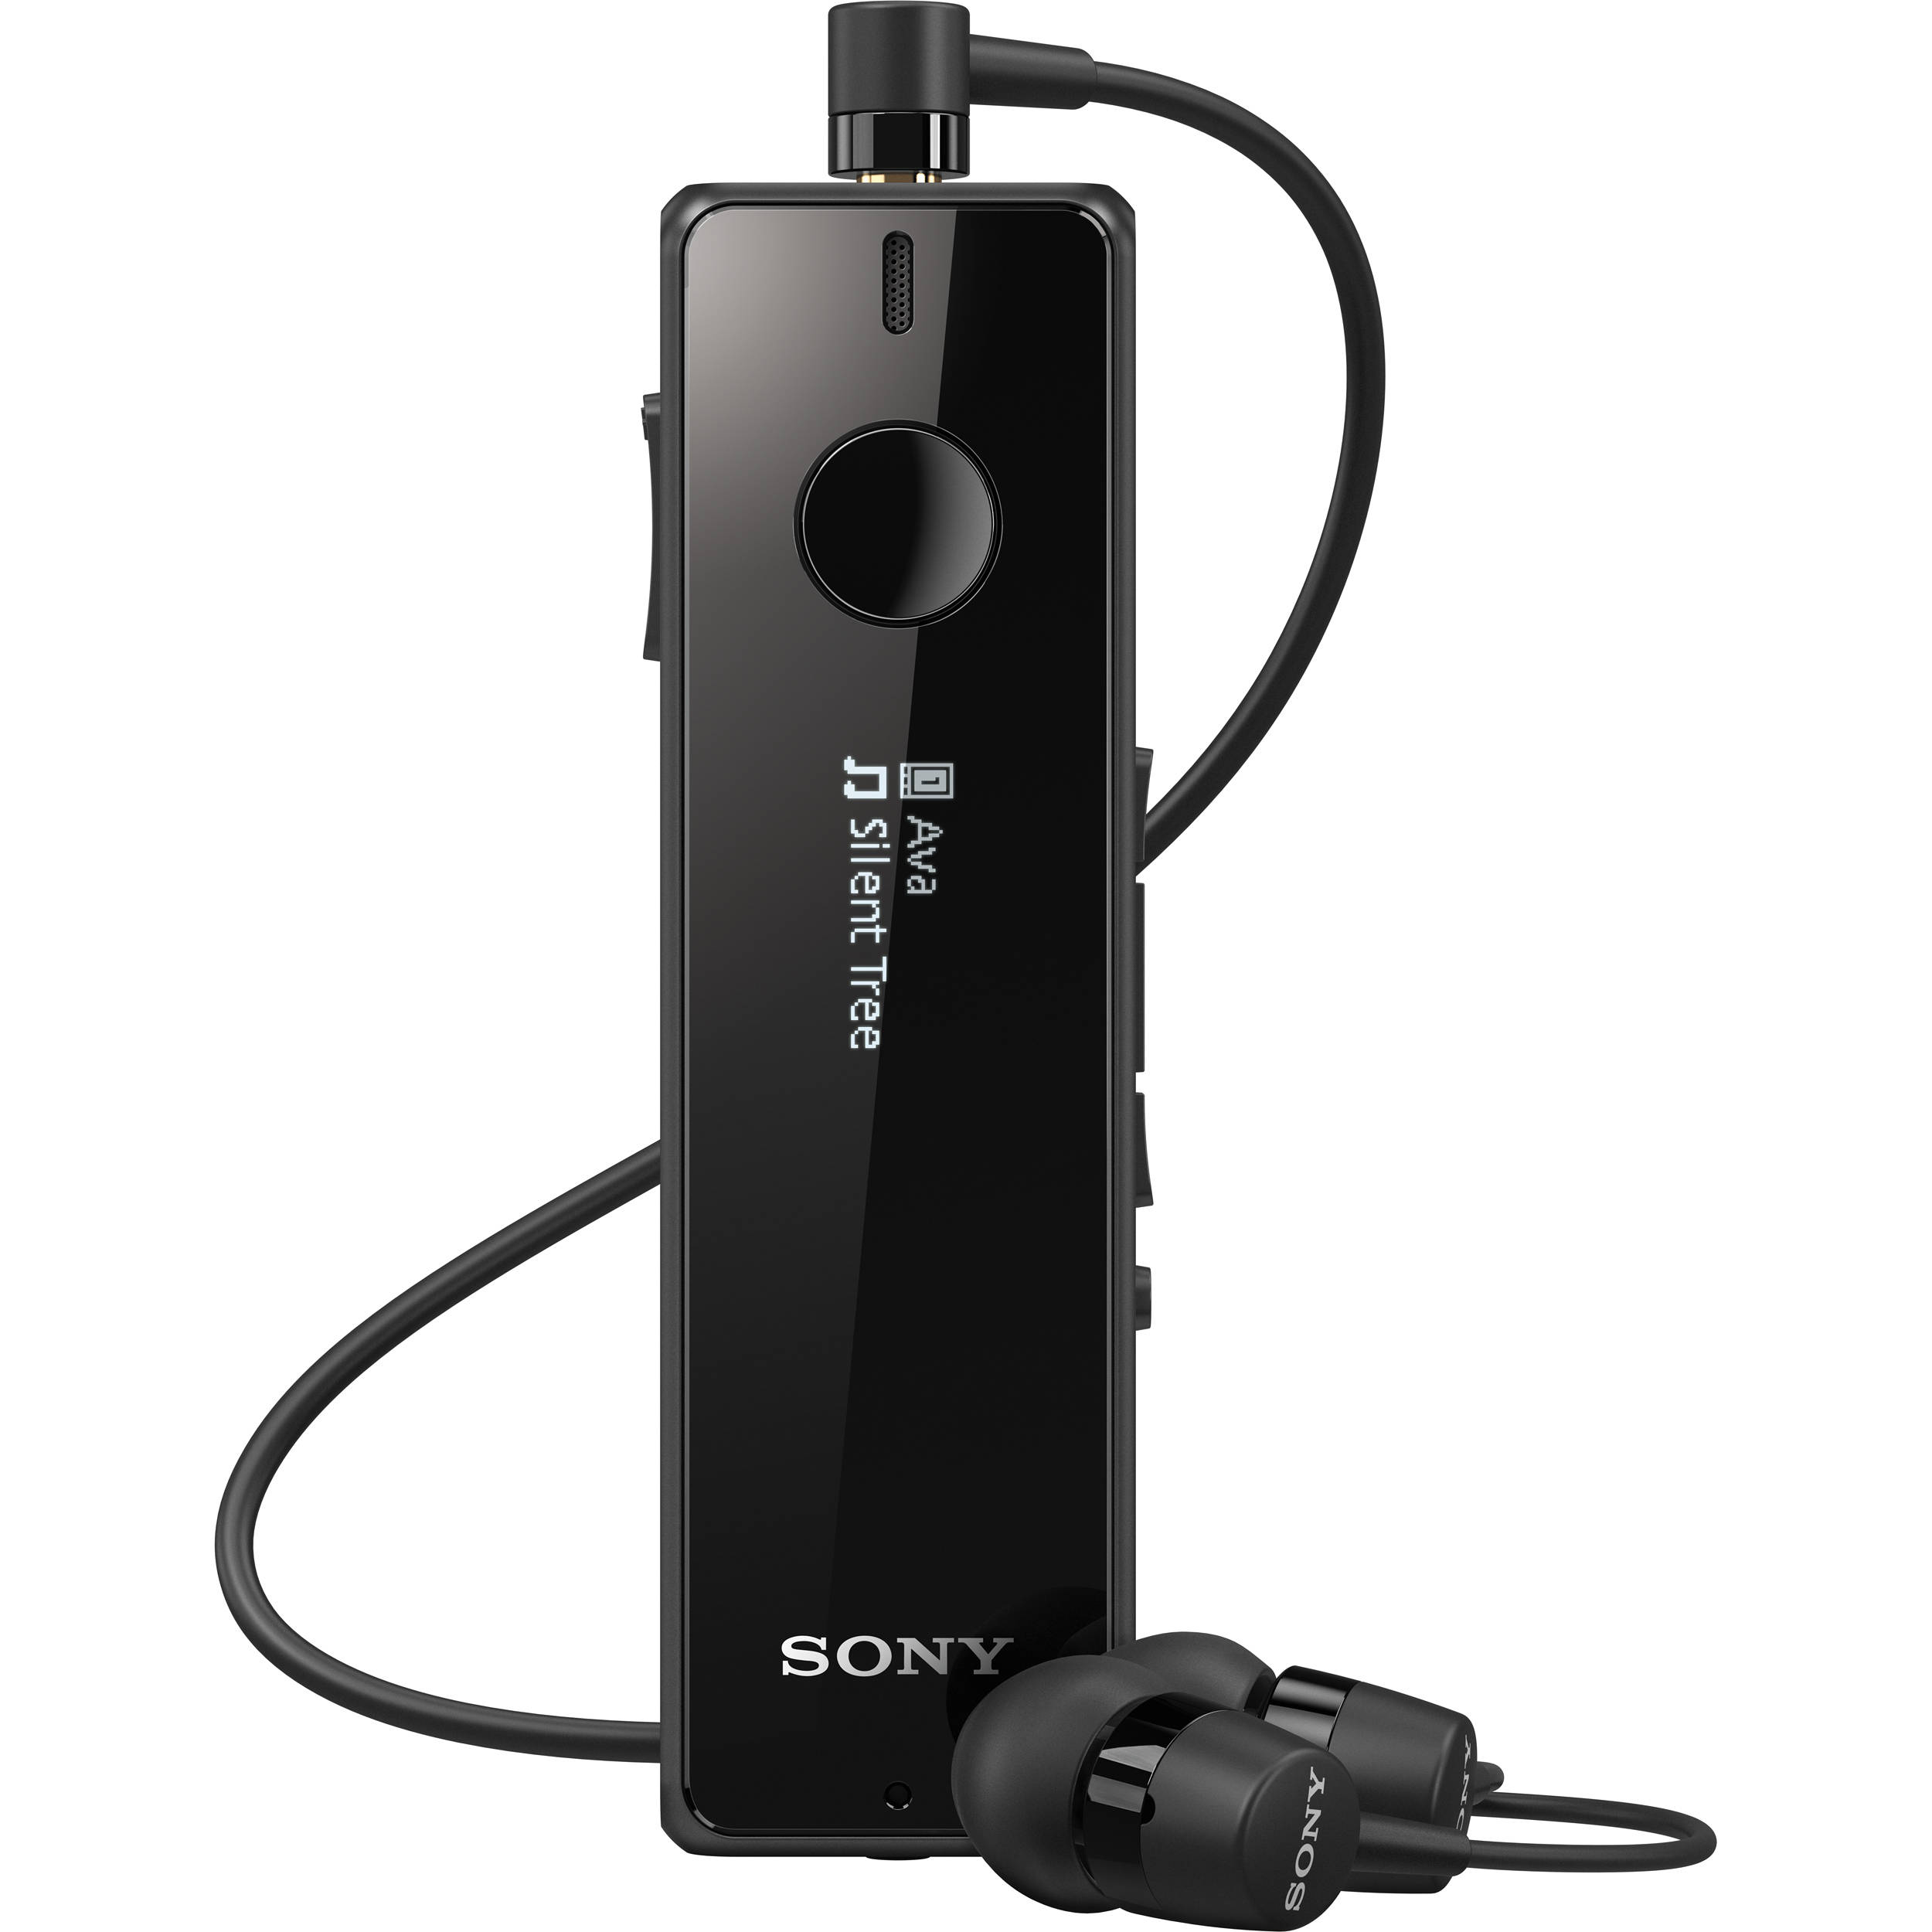 Sony Smart Bluetooth Handset Sbh52 Black 1276 3318 B H Photo